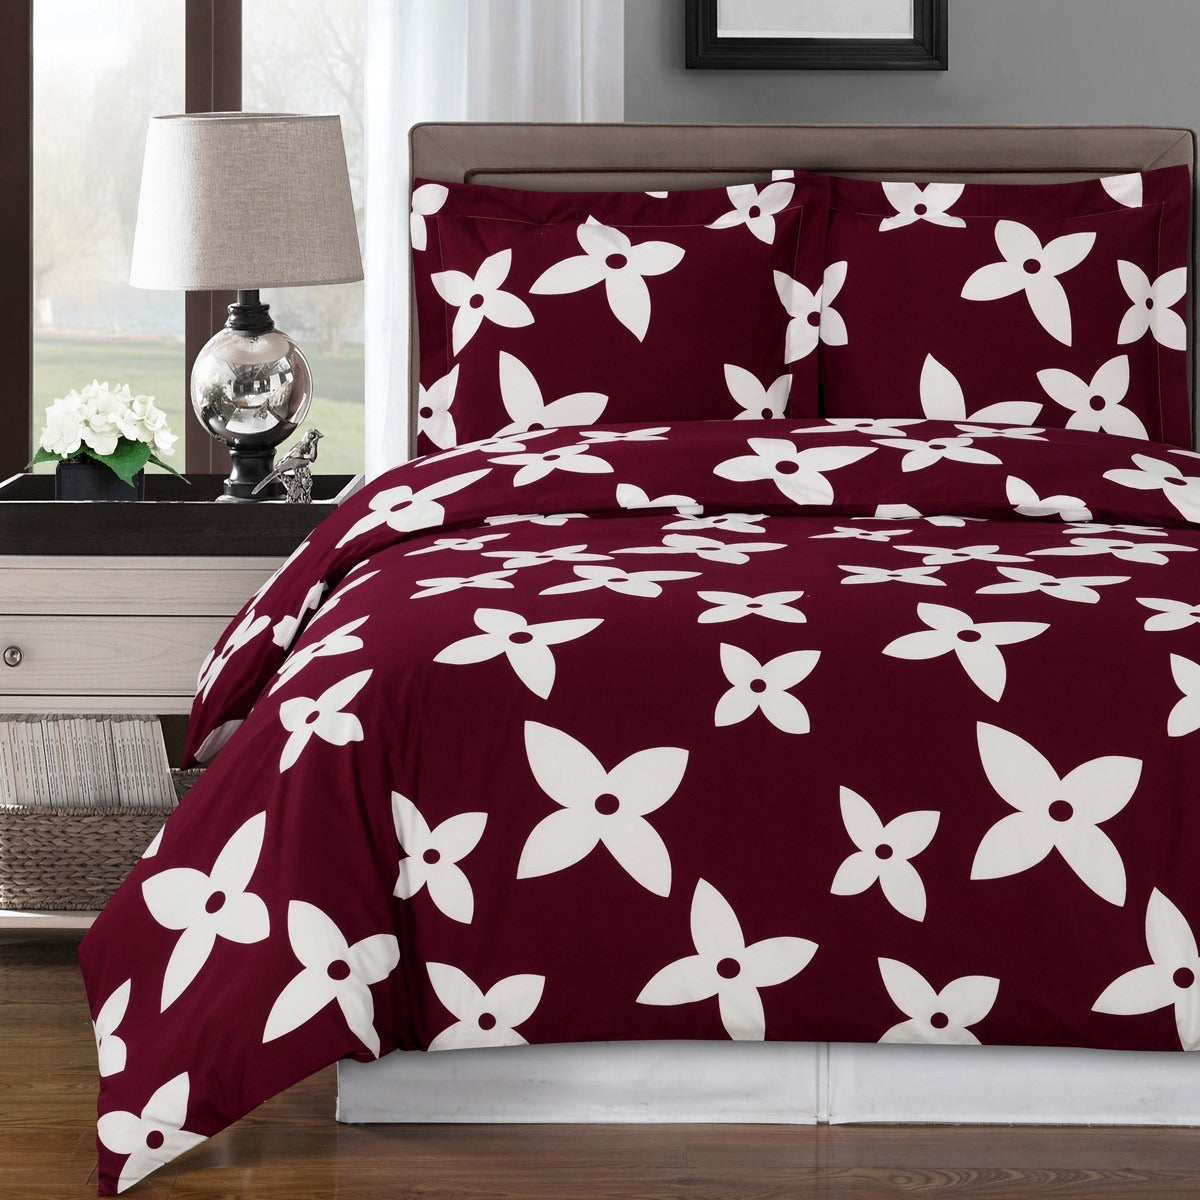 Burgundy Red & White Floral Duvet Cover Set,bedding set,Adley & Company Inc.